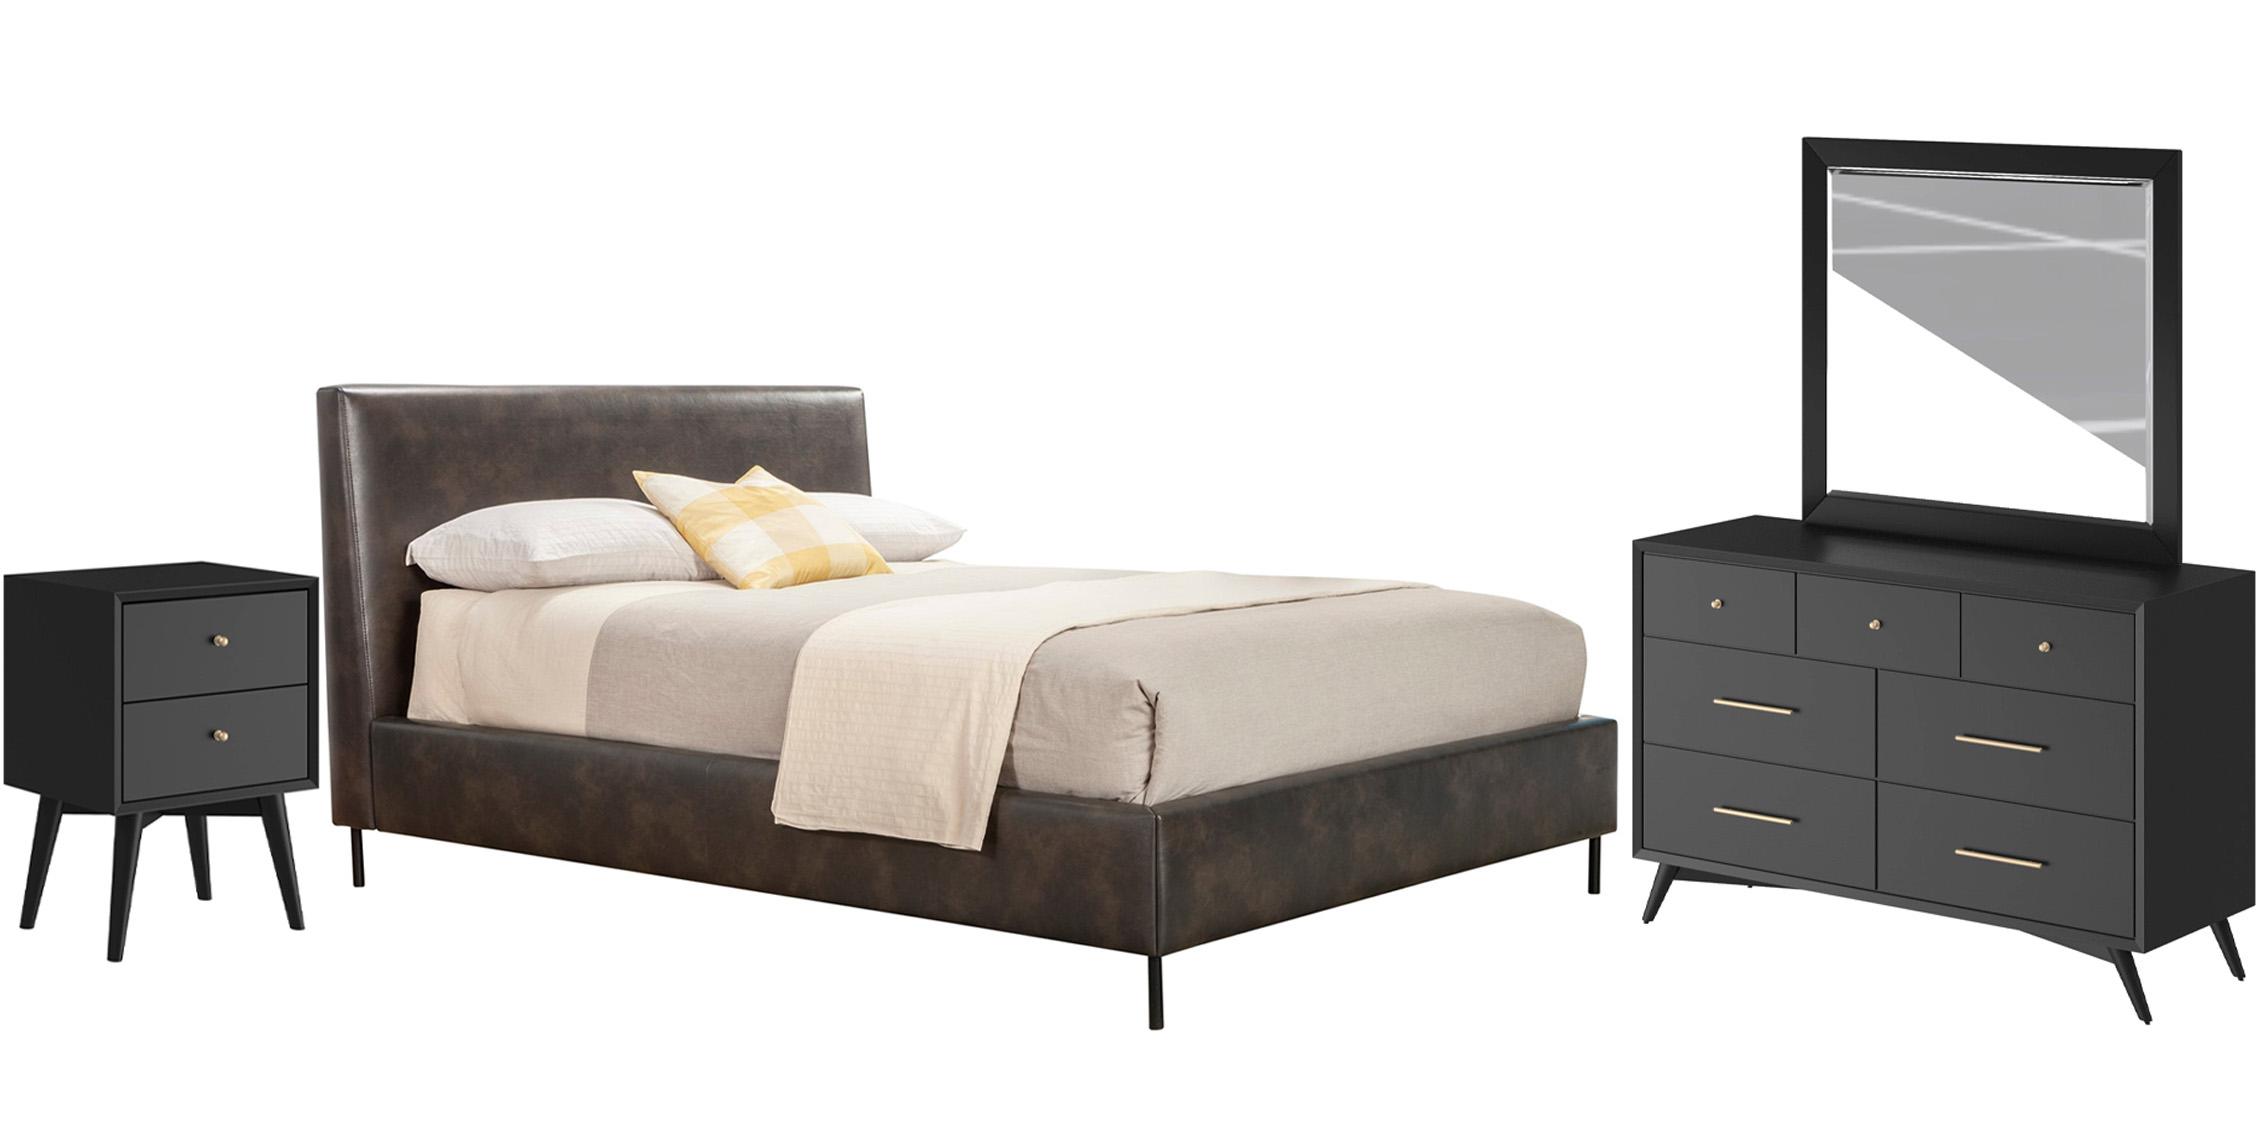 Modern Platform Bedroom Set SOPHIA  / FLYNN 6902EK-GRY-Set-4-BLK in Gray, Black Faux Leather